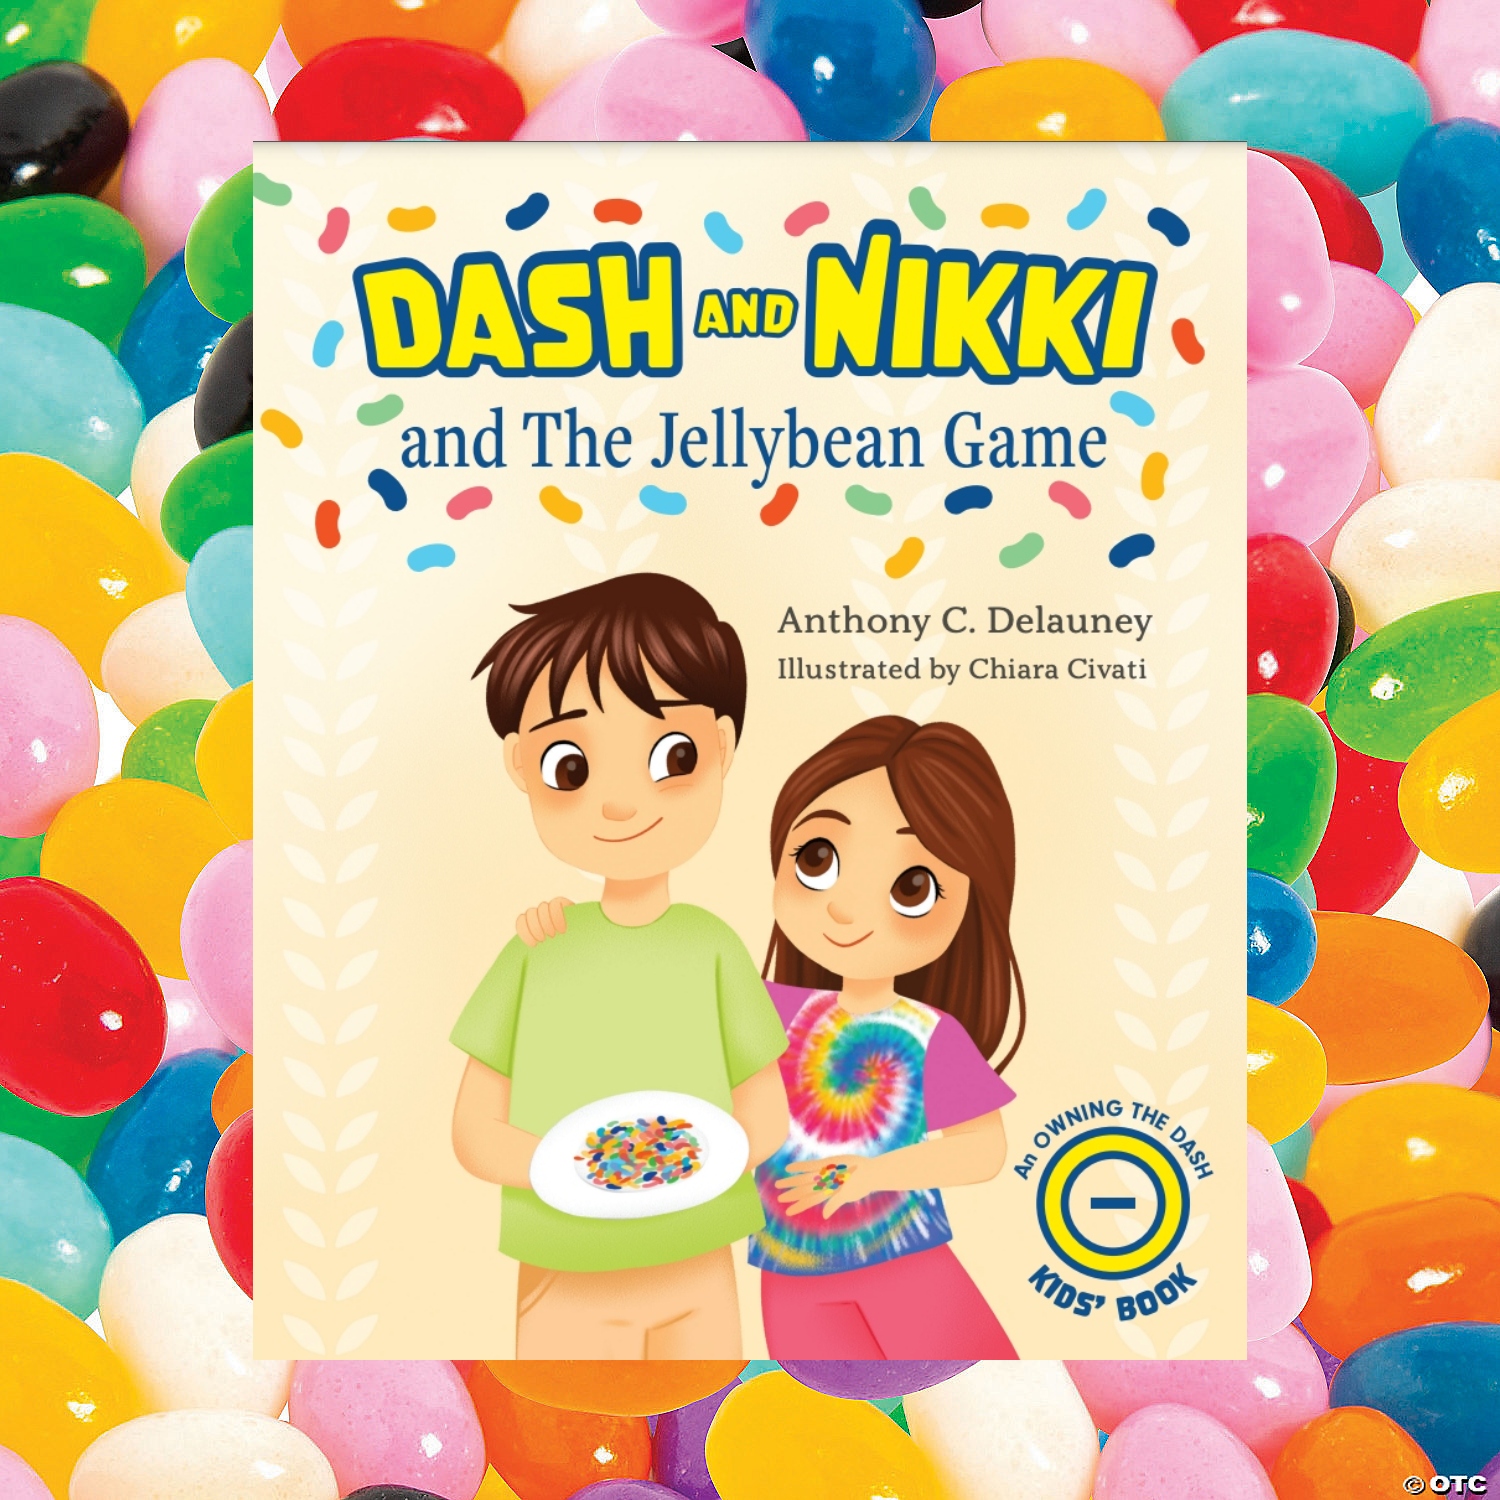 Dash and Nikki